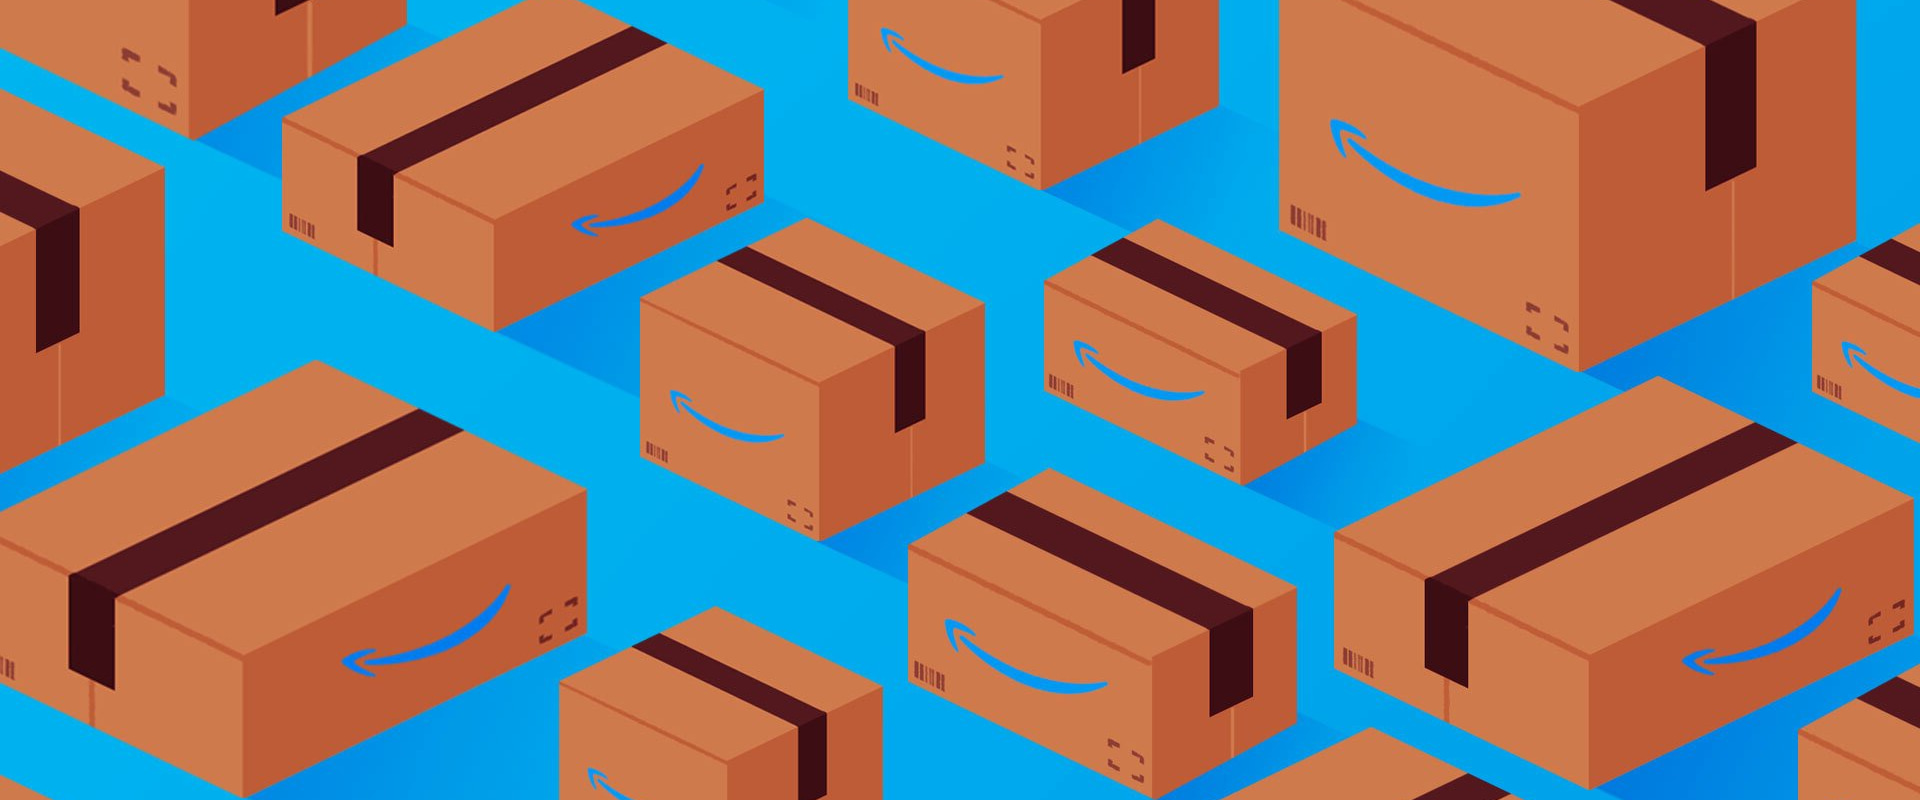 Amazon Prime Video - A Comprehensive Overview